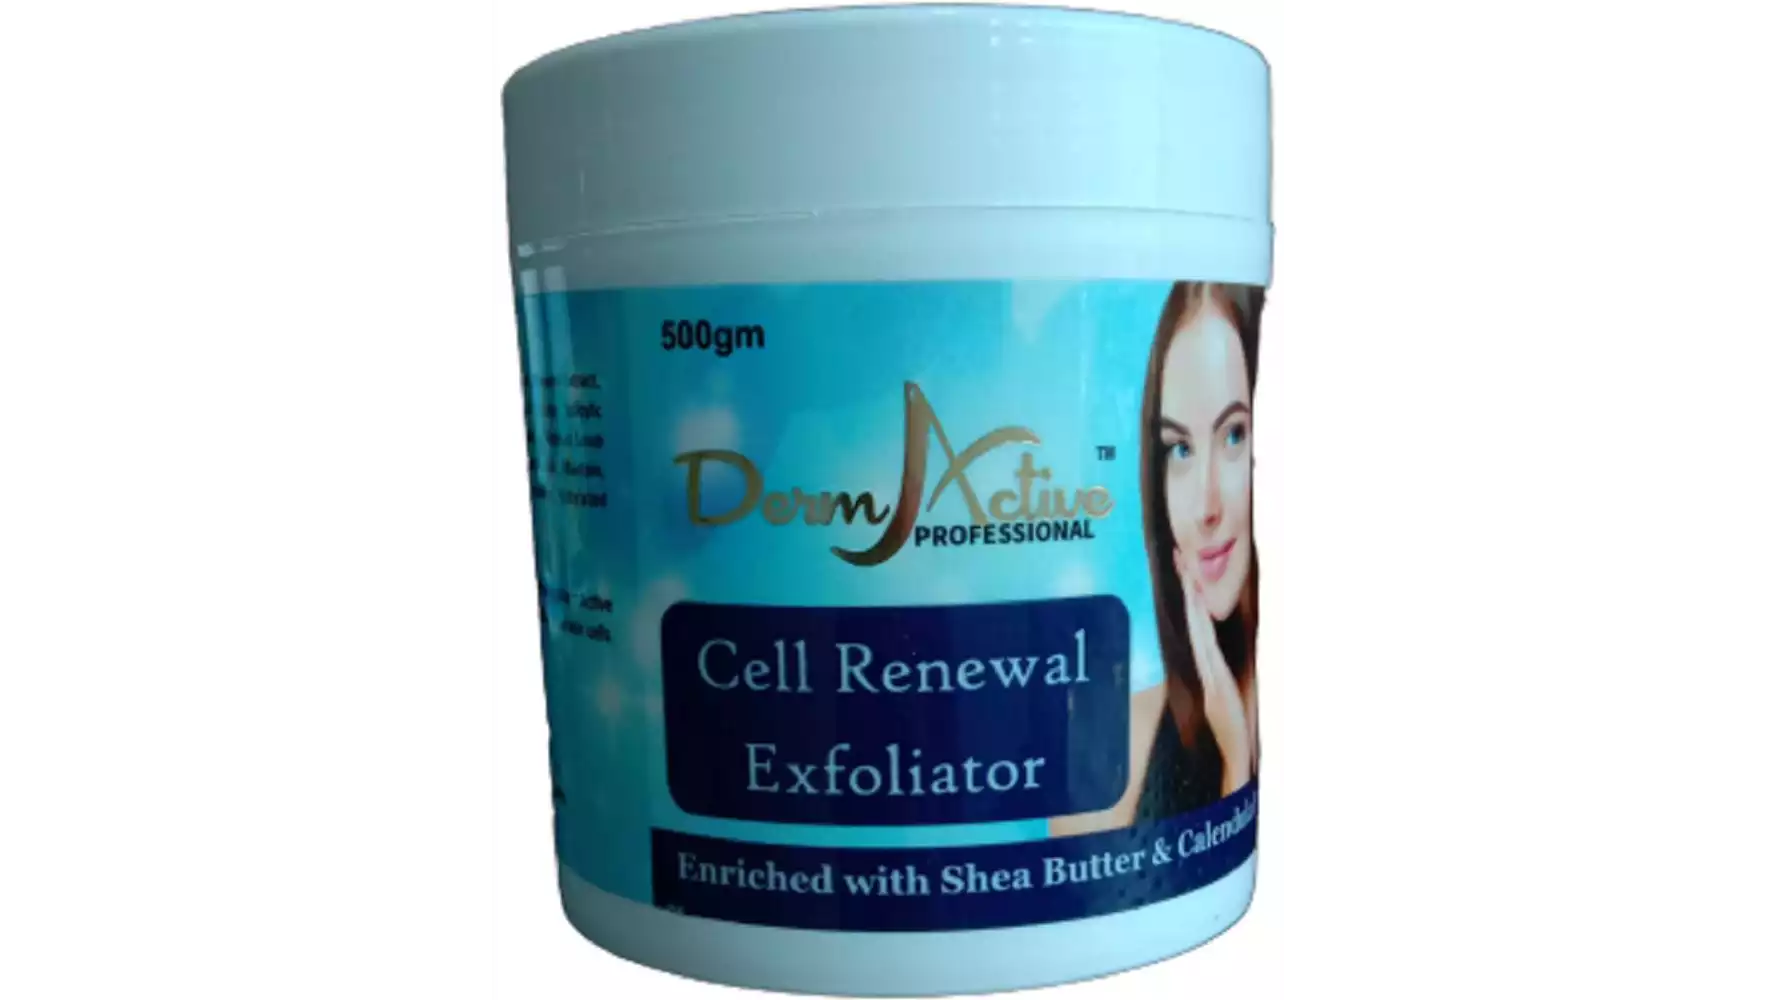 DermActive Cell Renewal Exfoliator (500g)